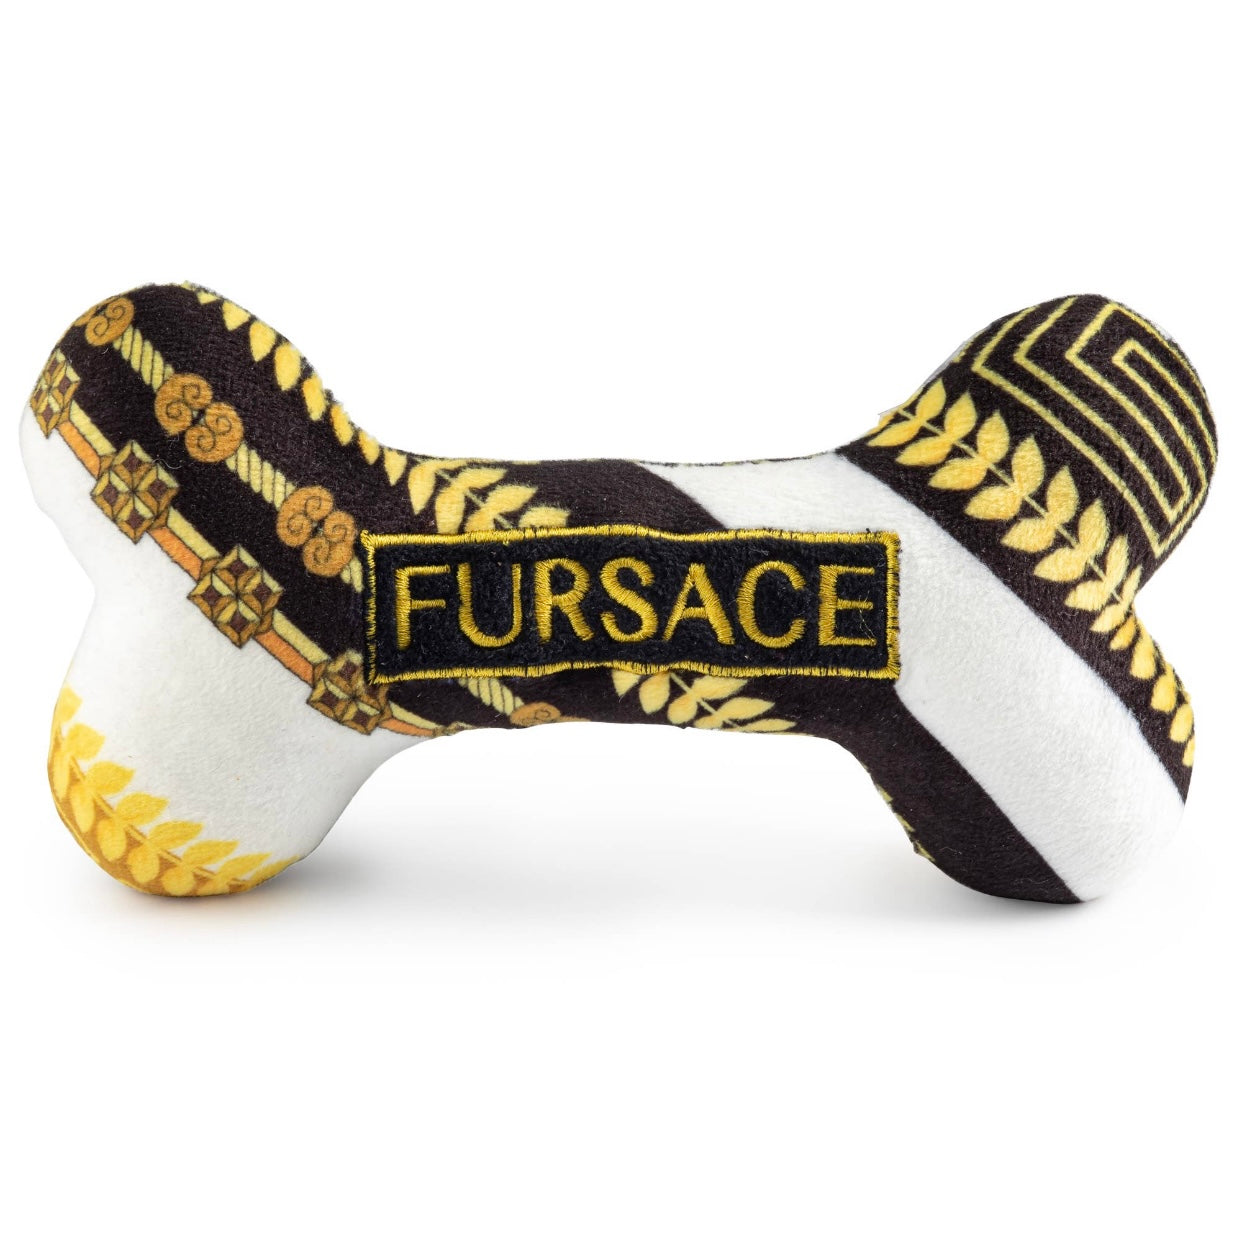 Fursace Dog Bone Dog Toy